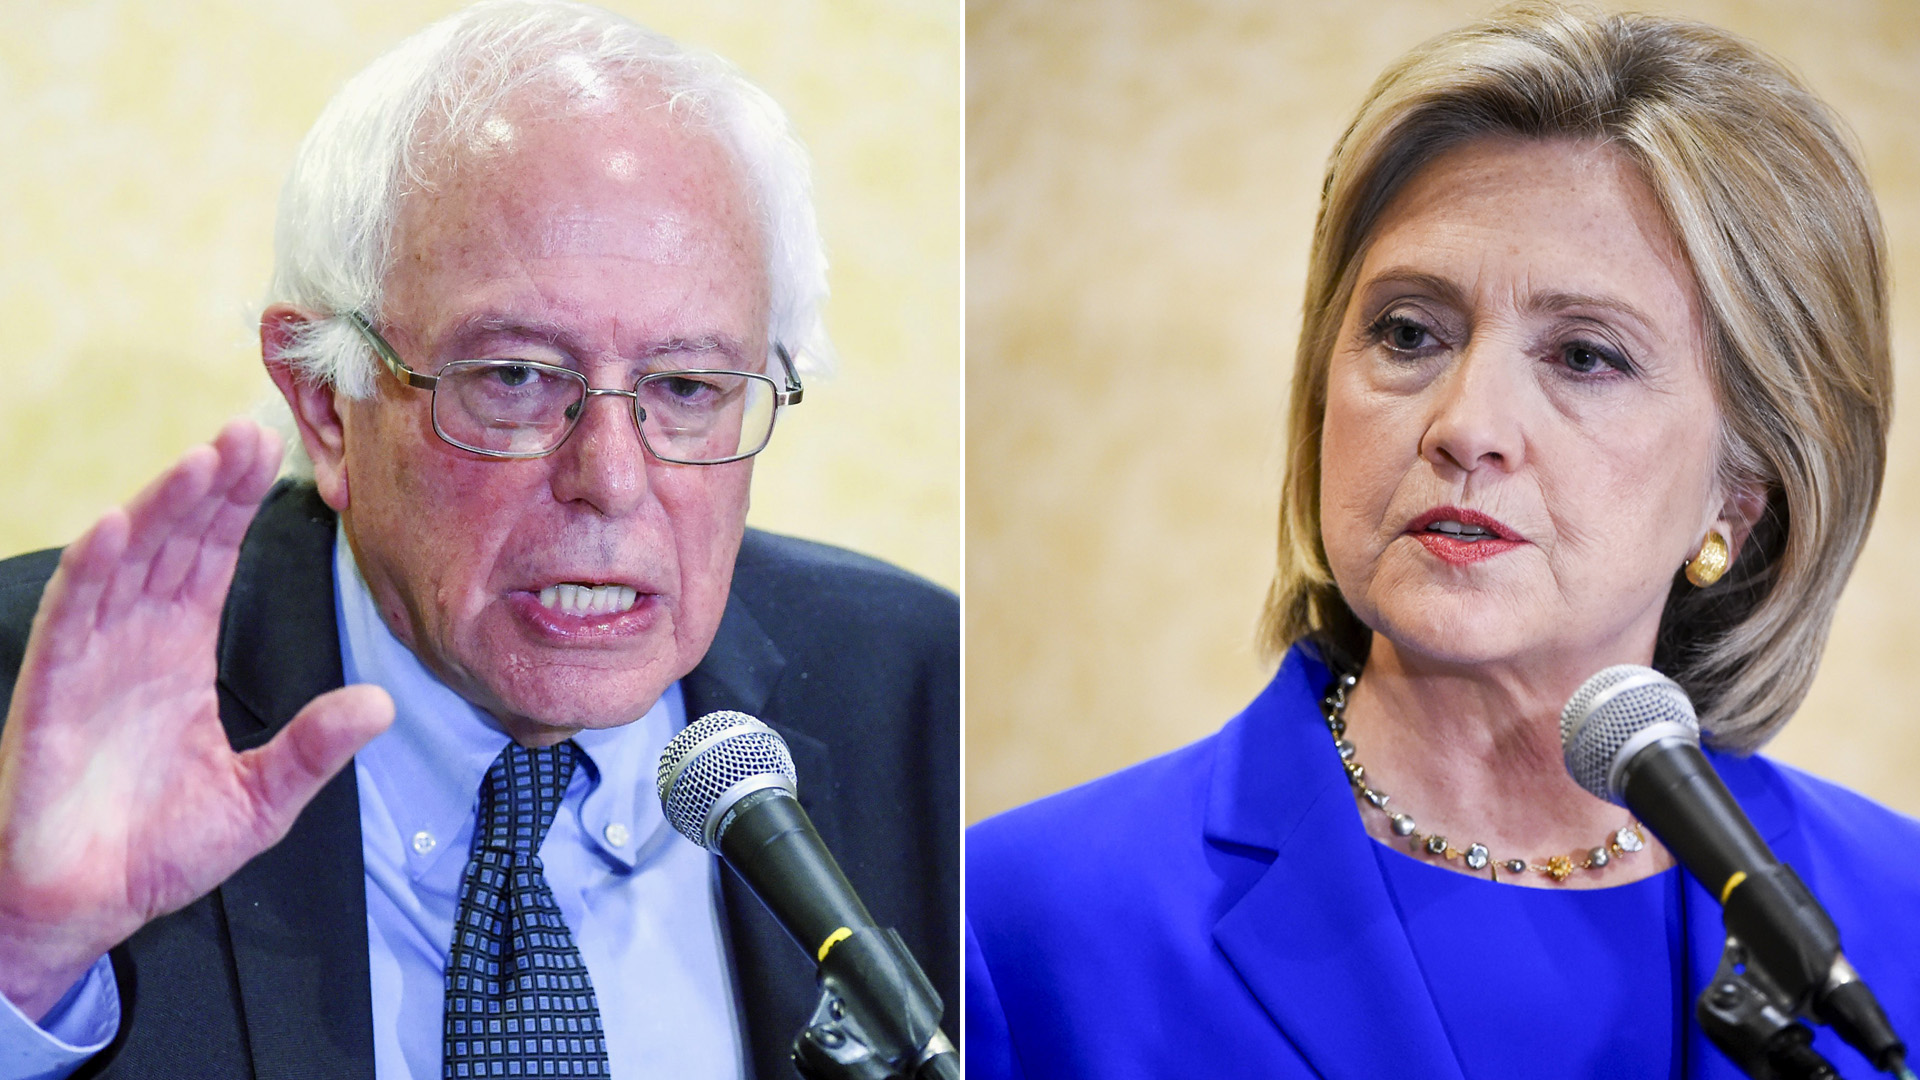 Election 2016: Iowa poll shows Bernie Sanders closing in on Hillary Clinton - CBS News1920 x 1080